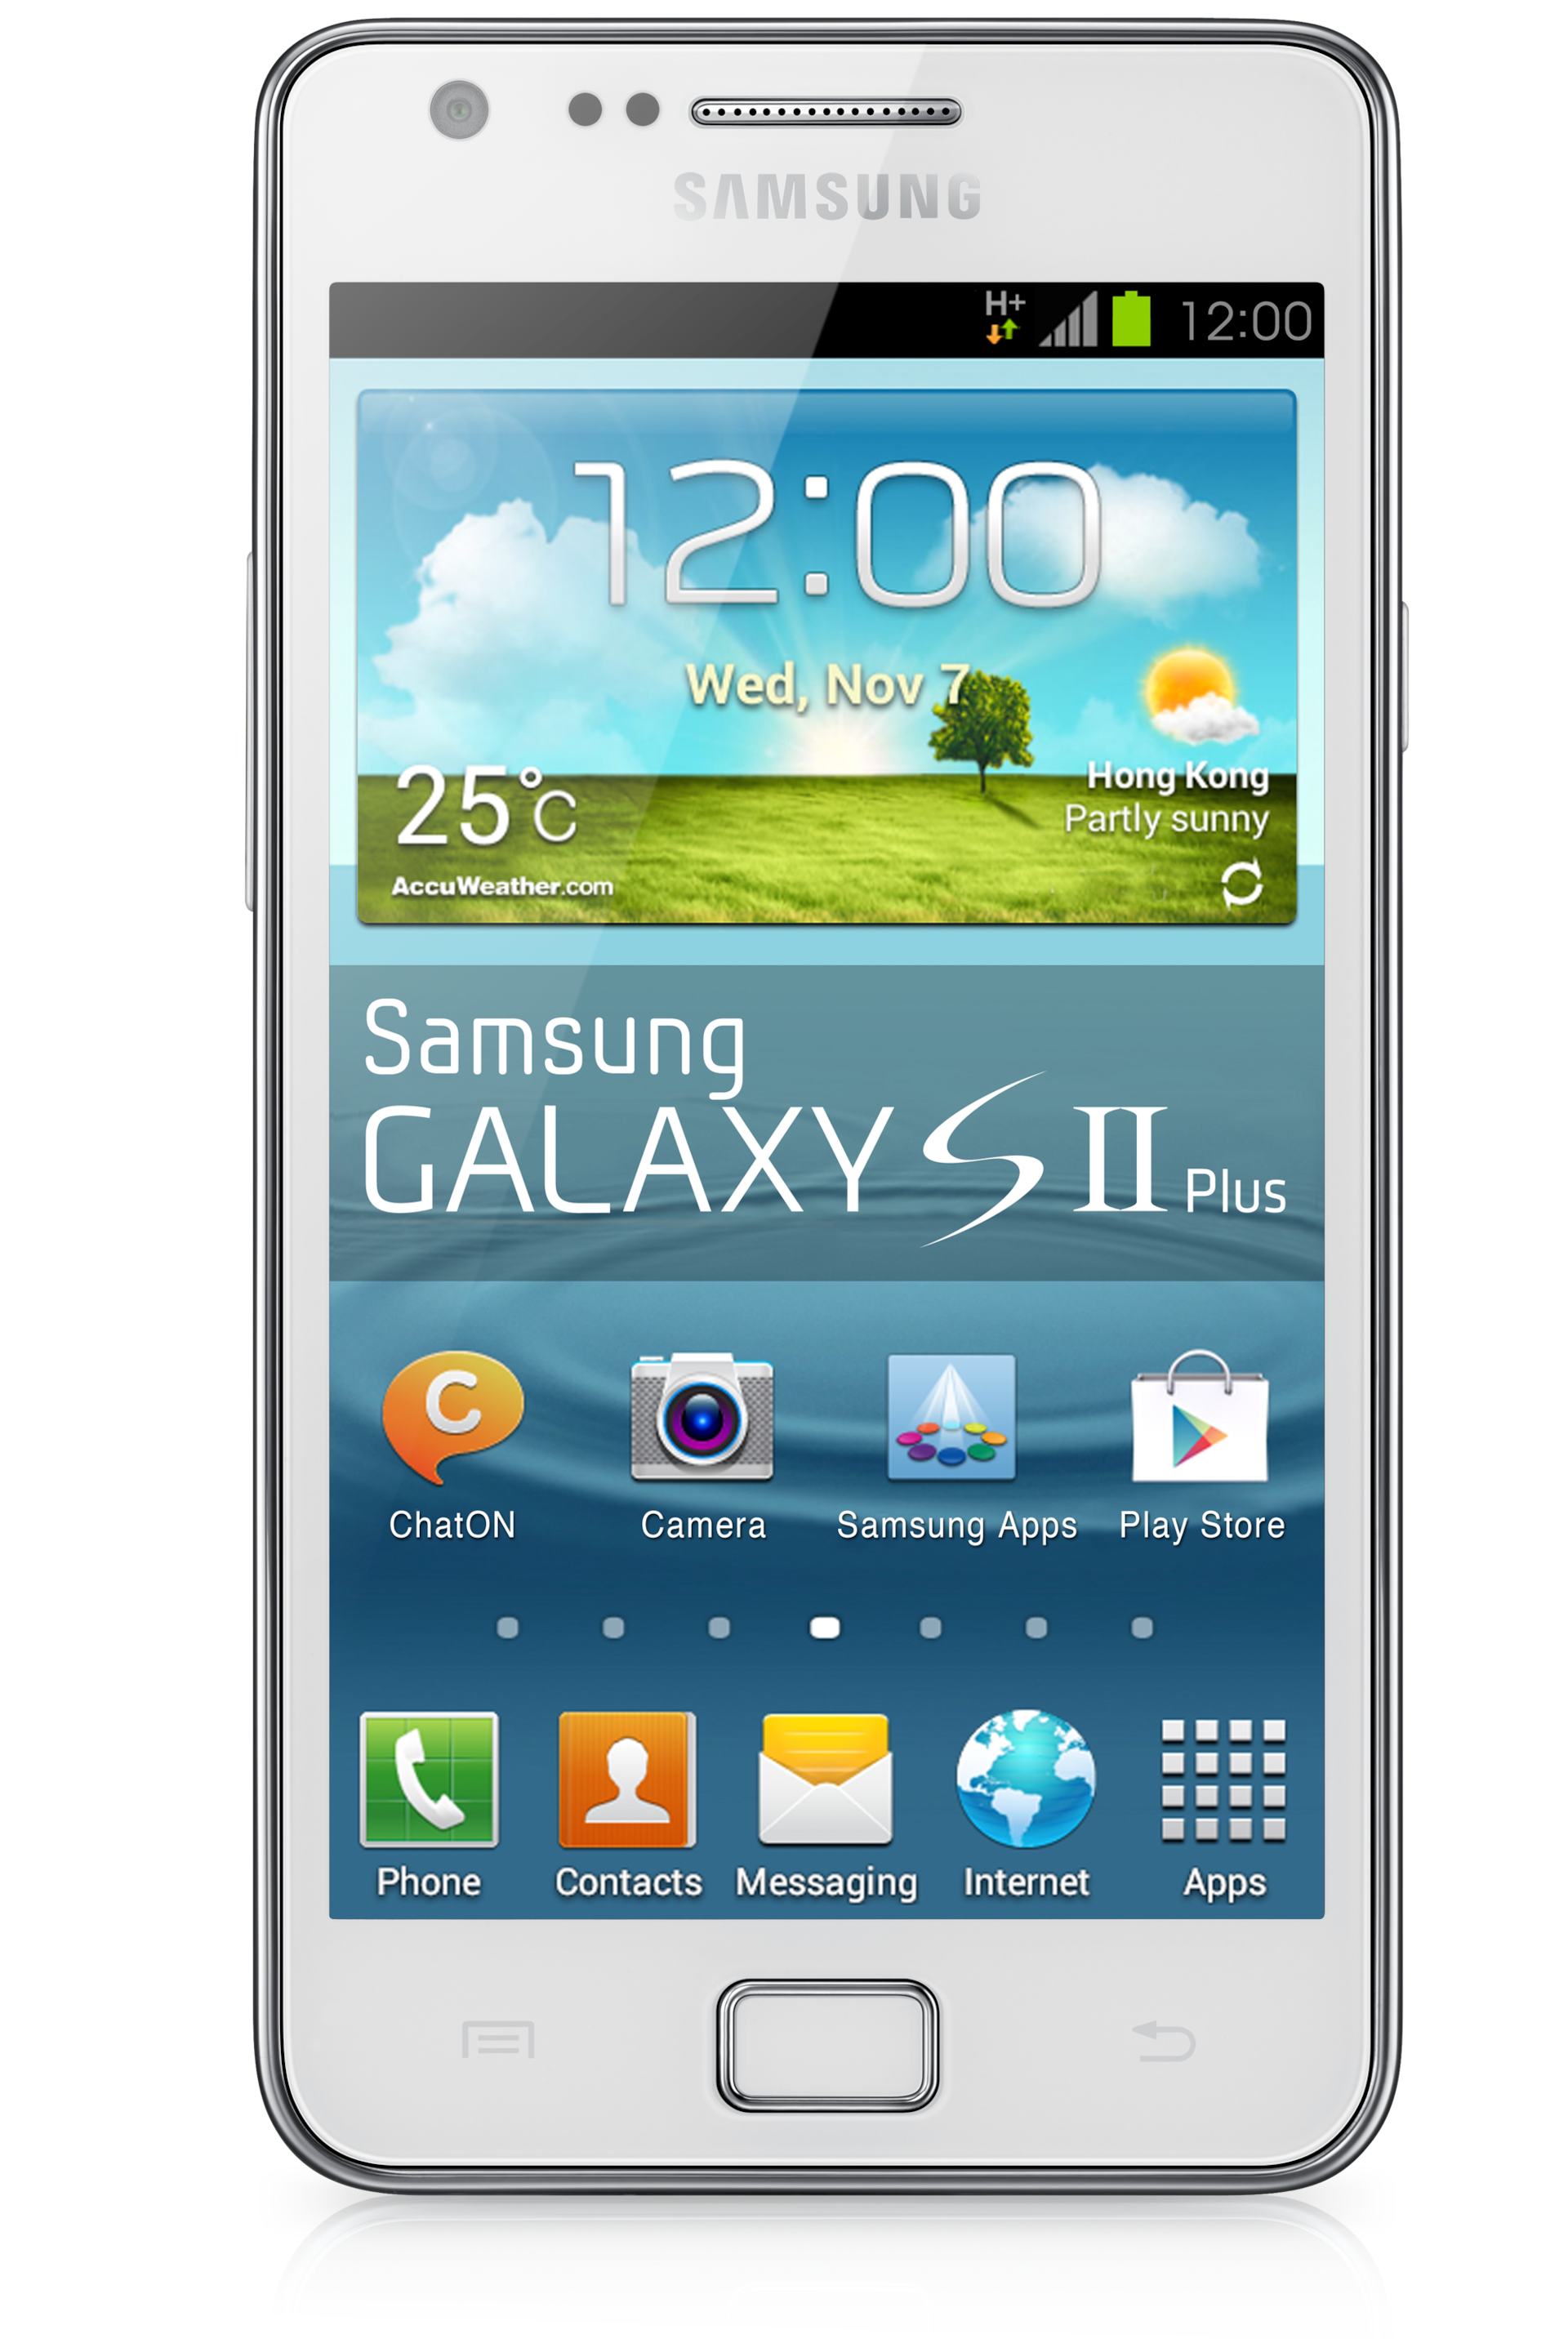 Samsung galaxy 23 сколько